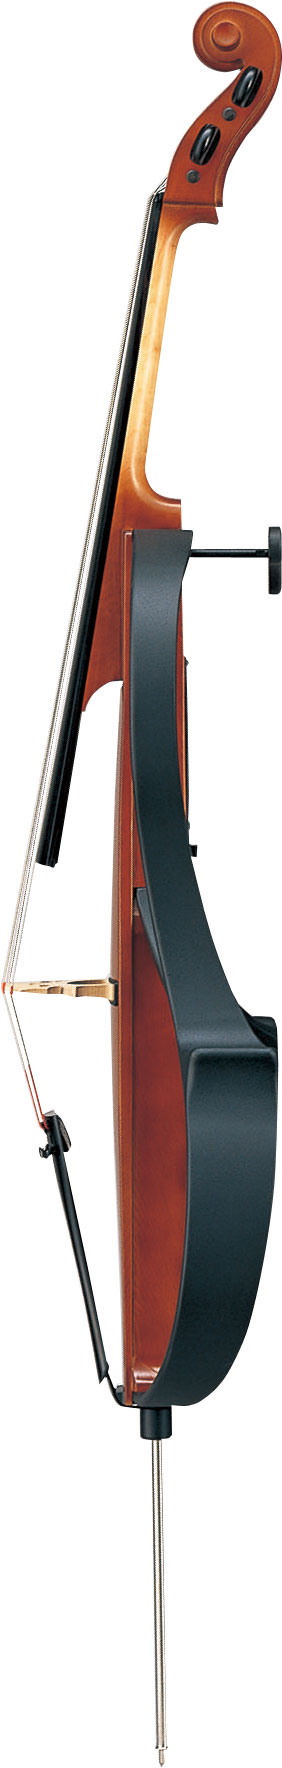 Silent Cello Modell SVC-110